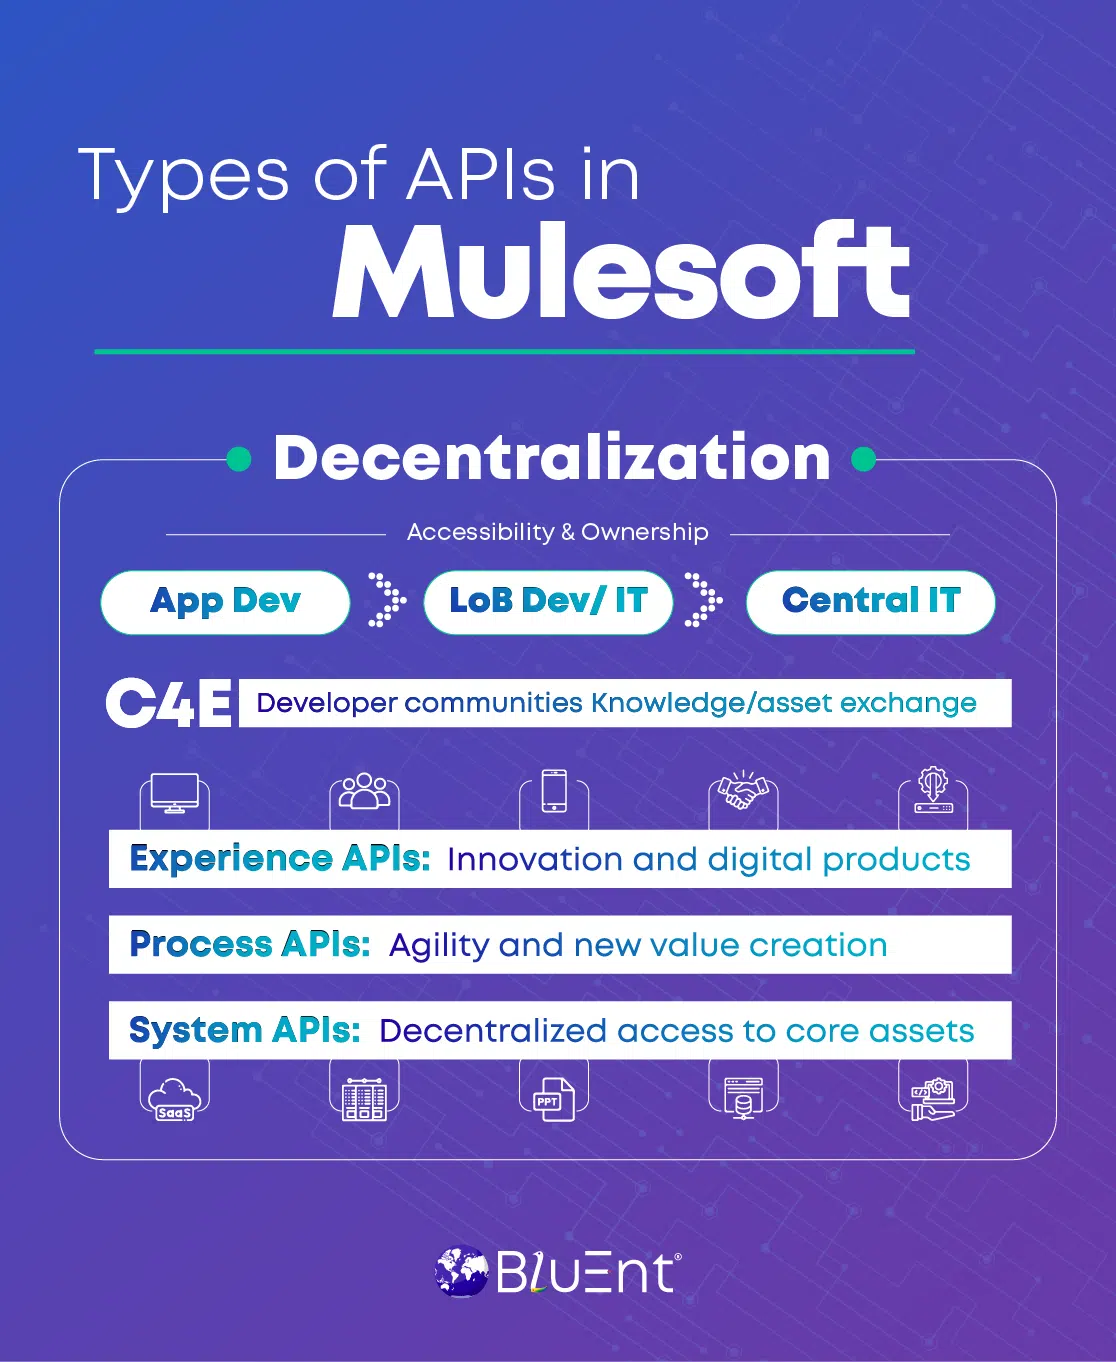 Types of Mulesoft APIs